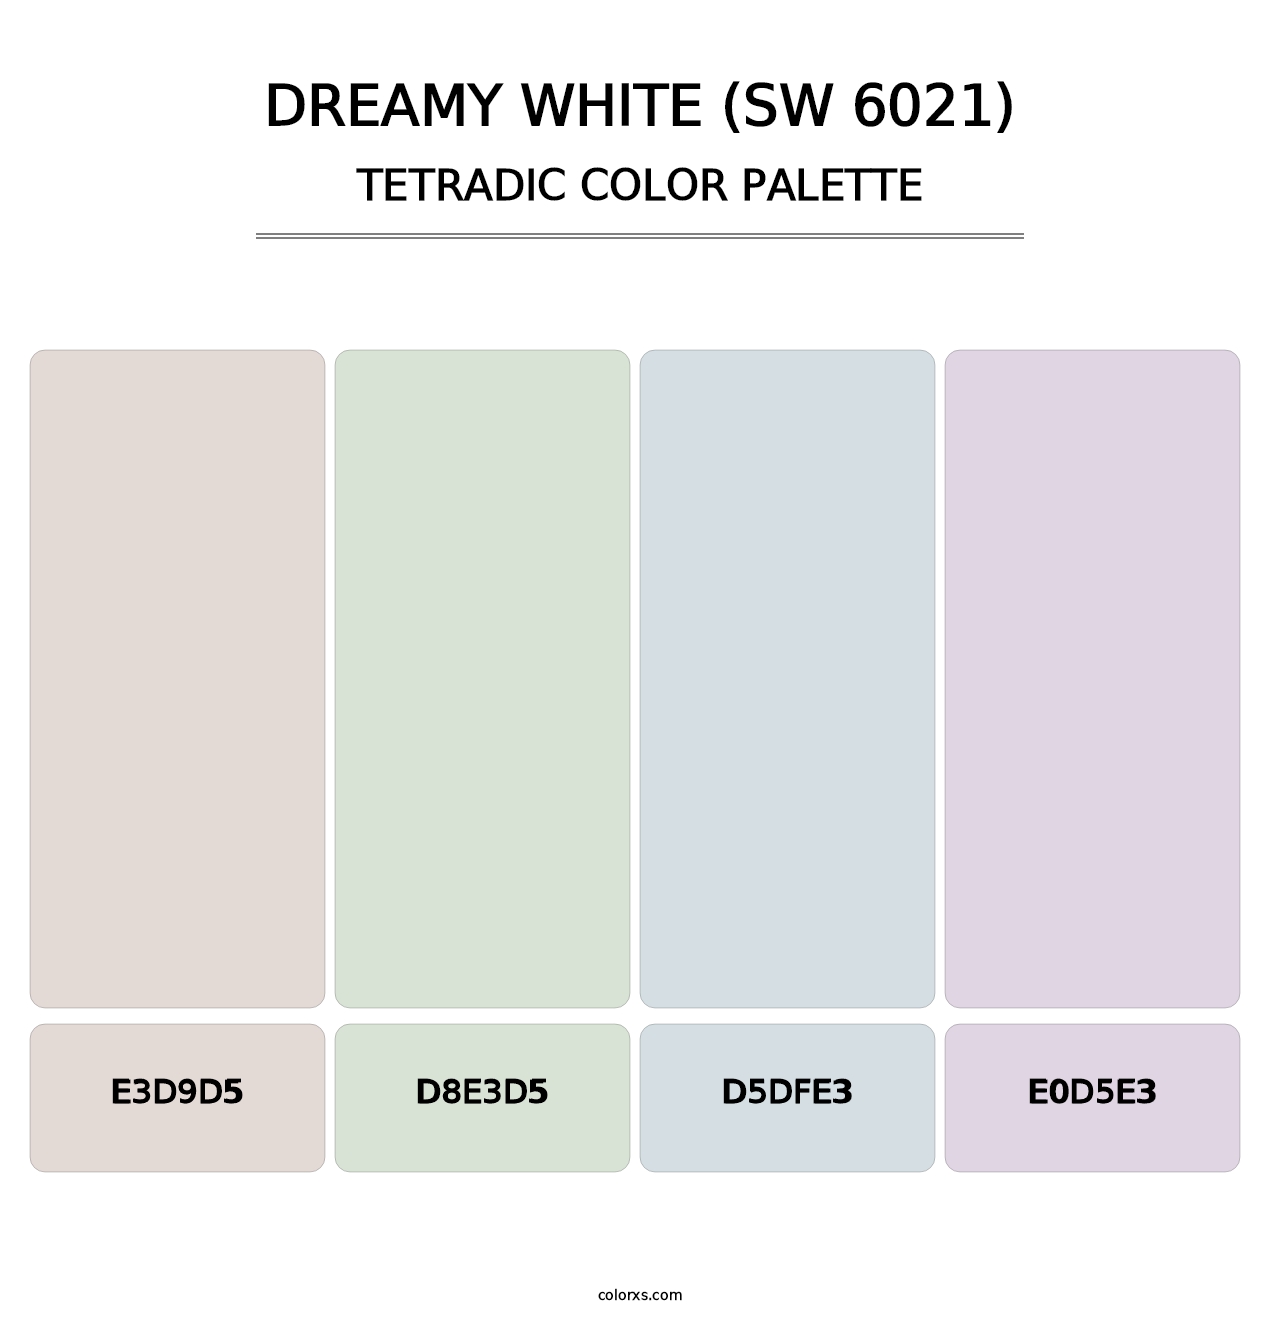 Dreamy White (SW 6021) - Tetradic Color Palette